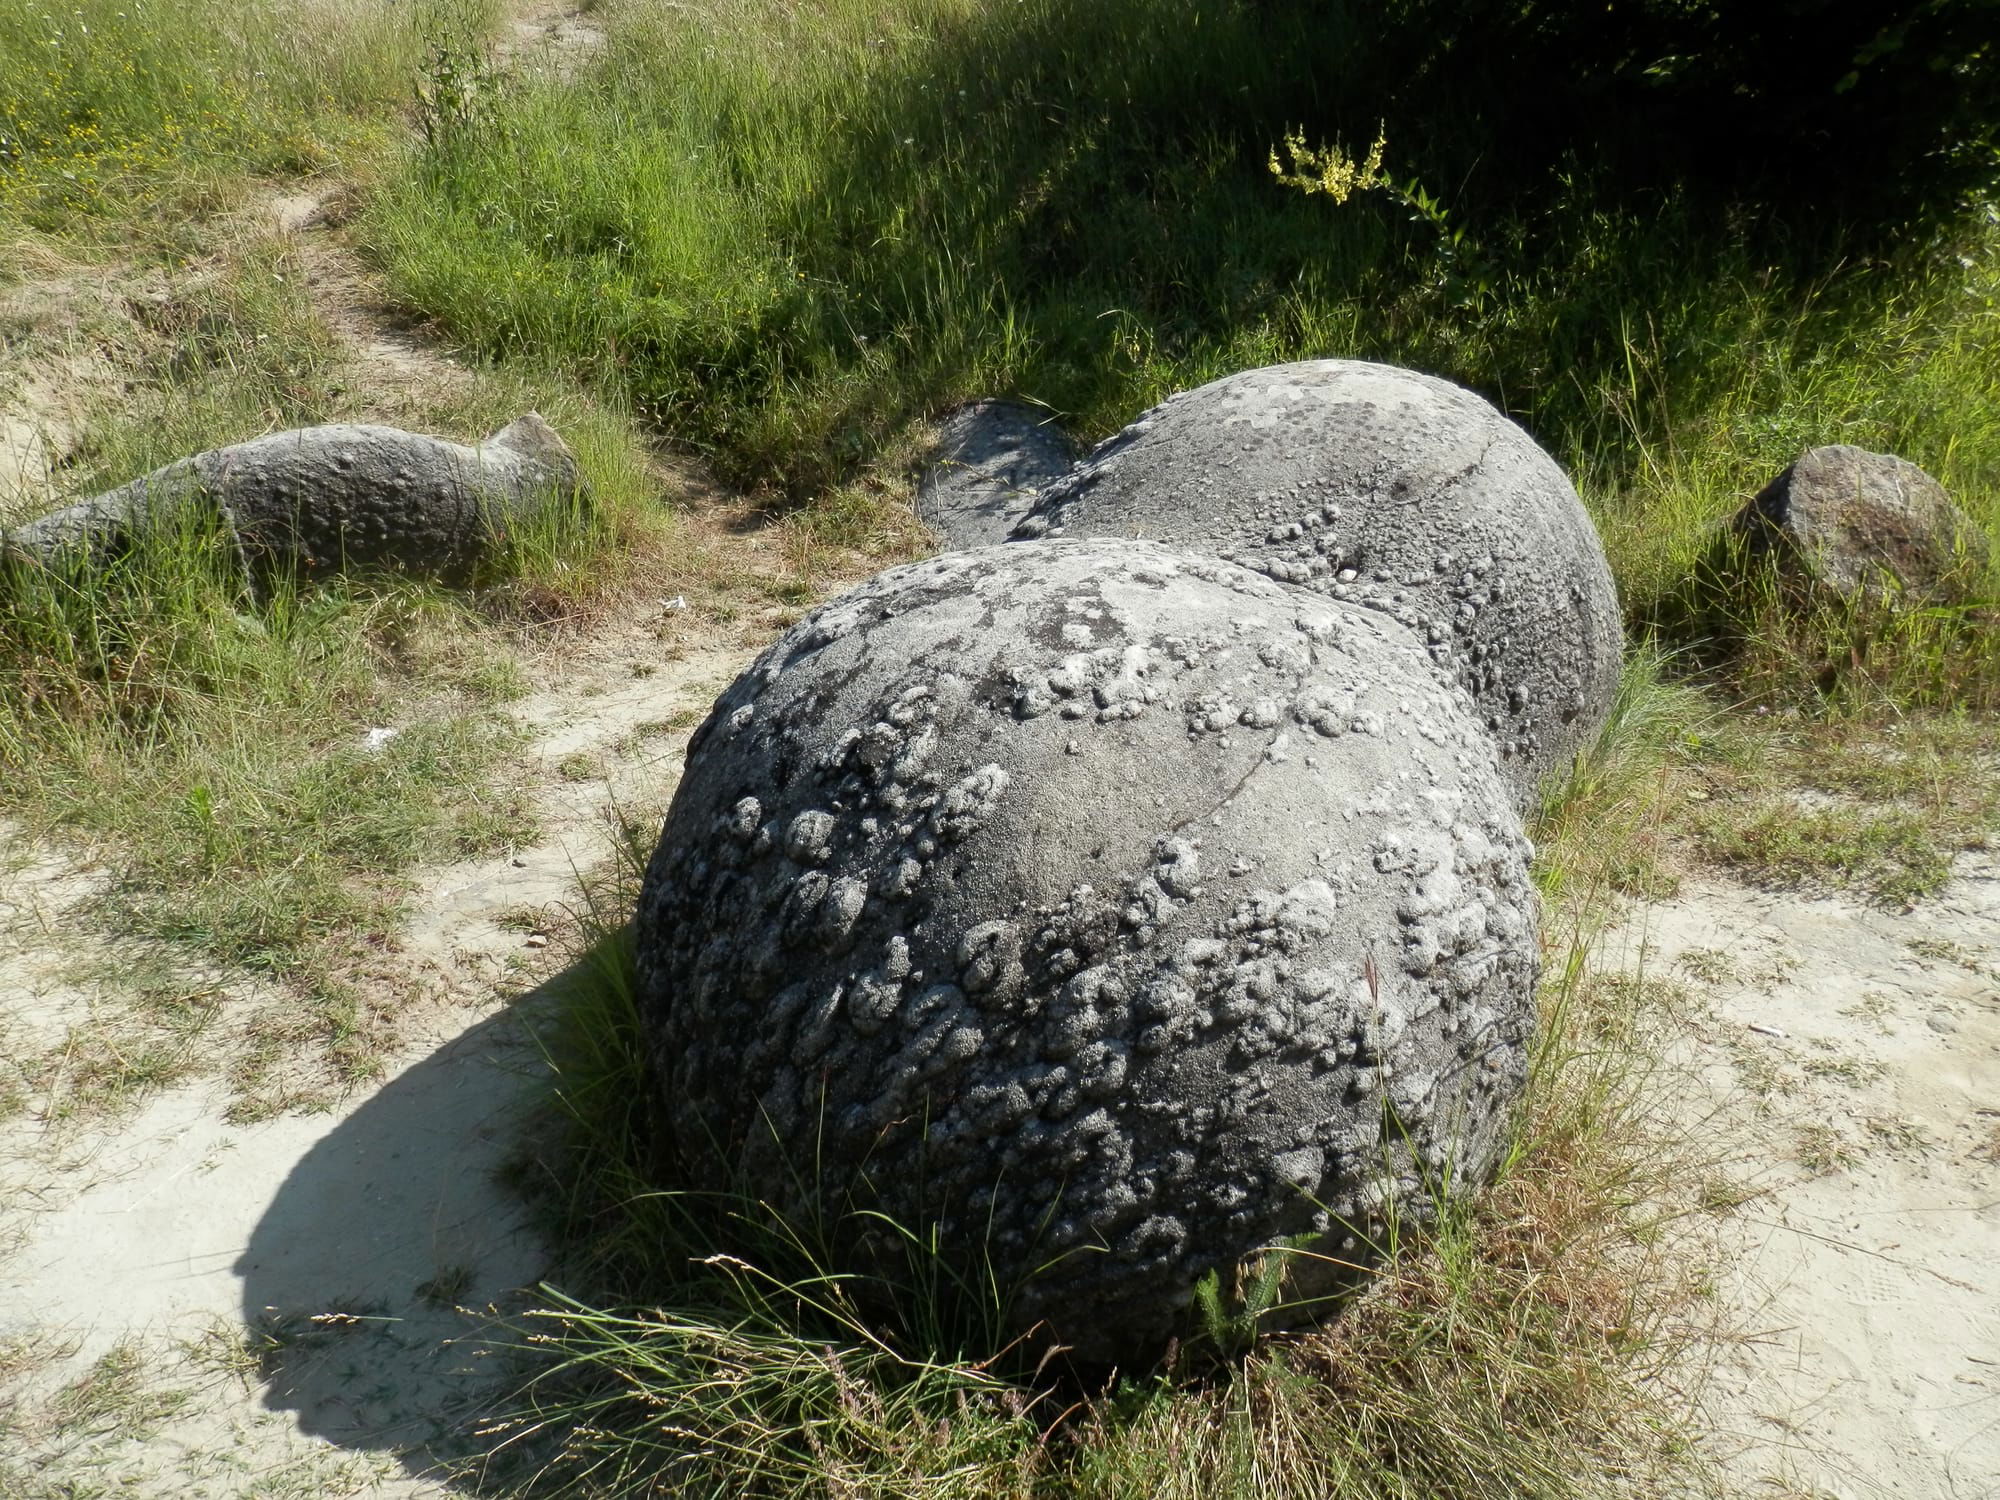 "Living Stones", Costesti, Valcea County